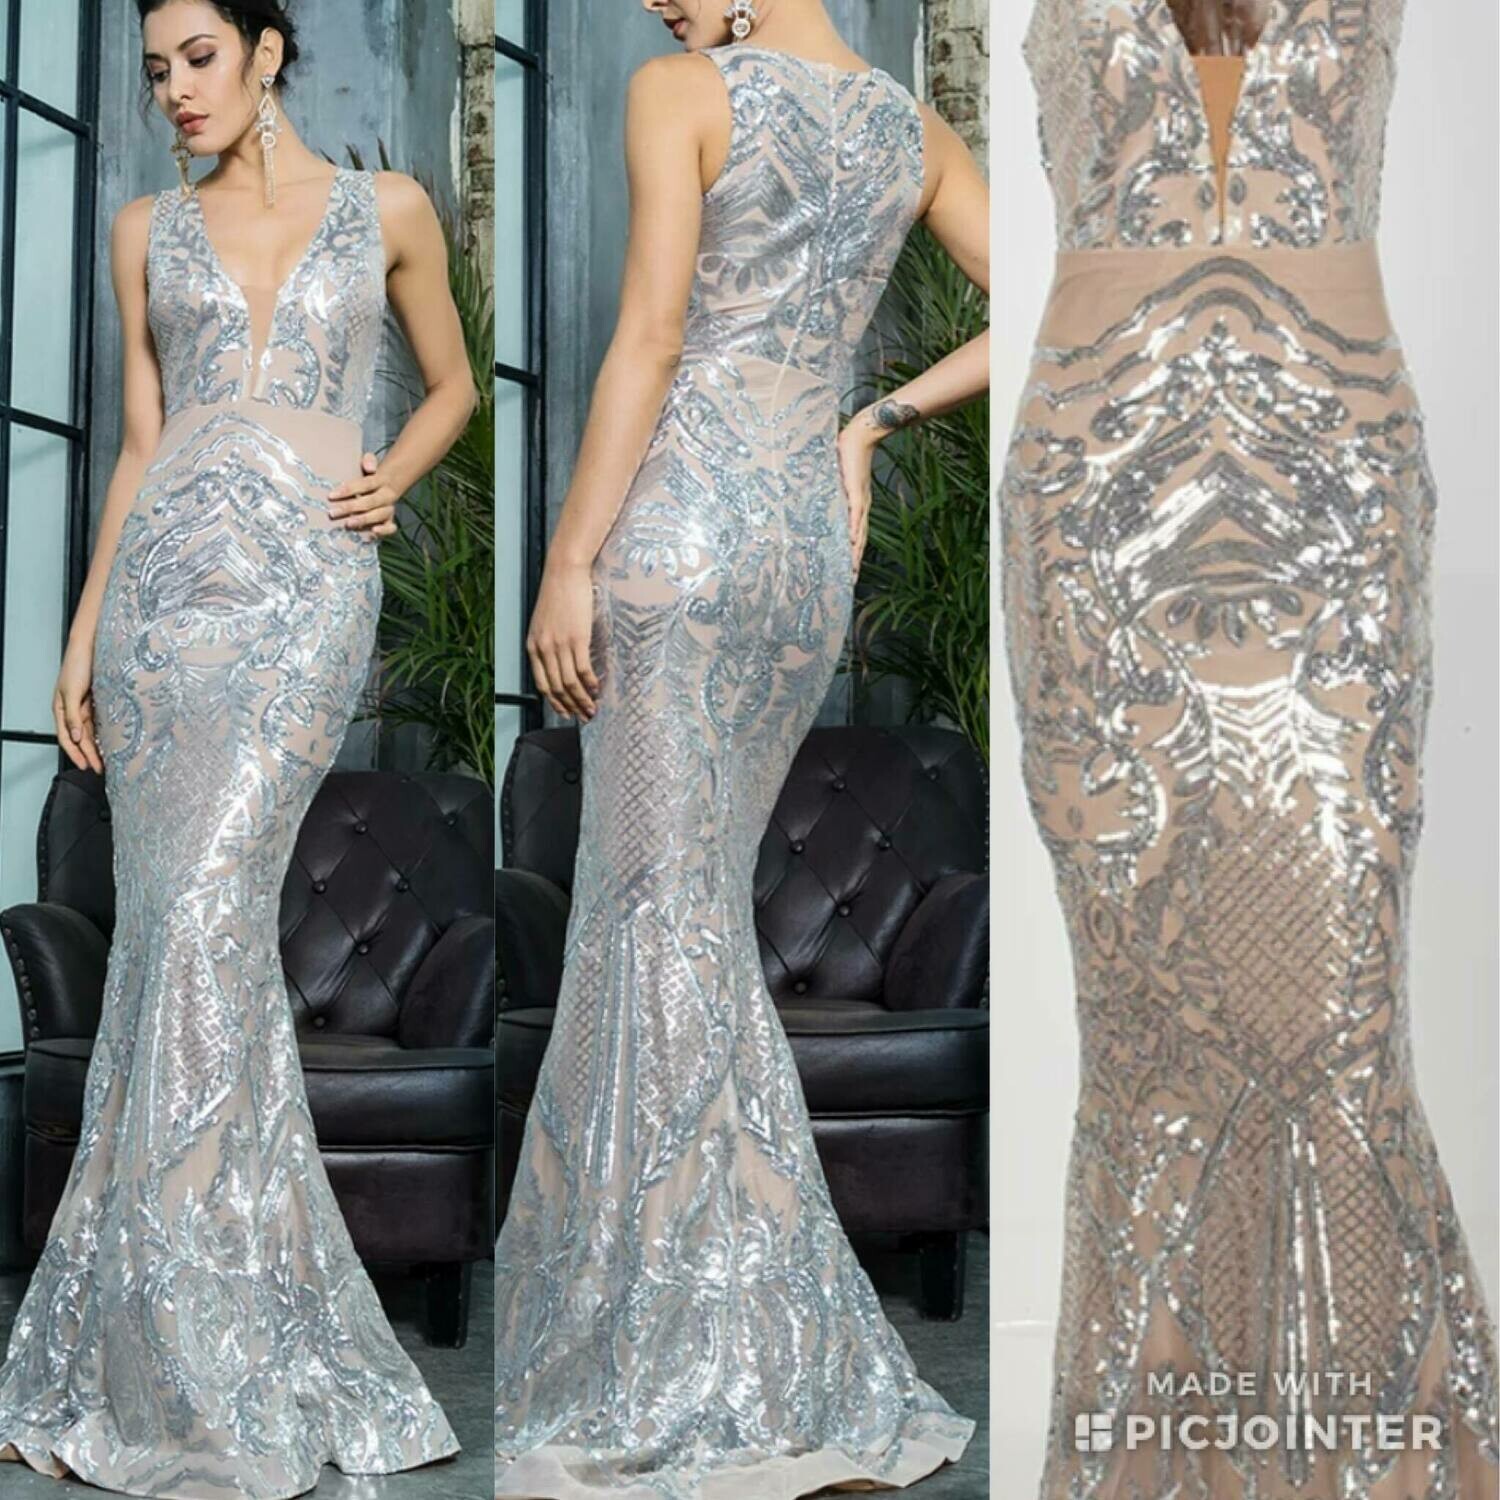 Silver sequin dress